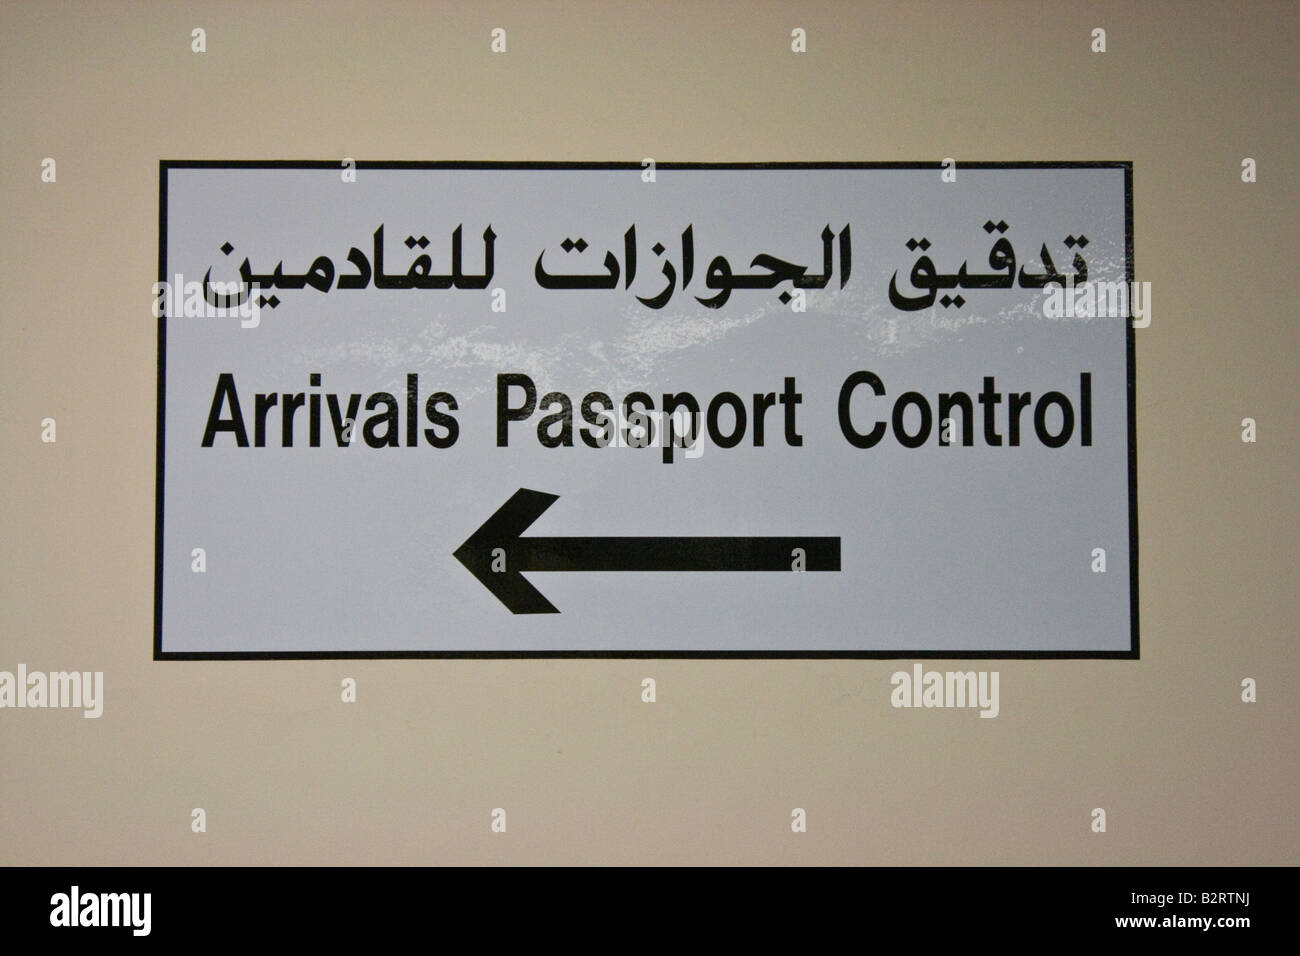 Arabic Arrivals Passport Control Sign in Sharjah UAE Airport Stock Photo